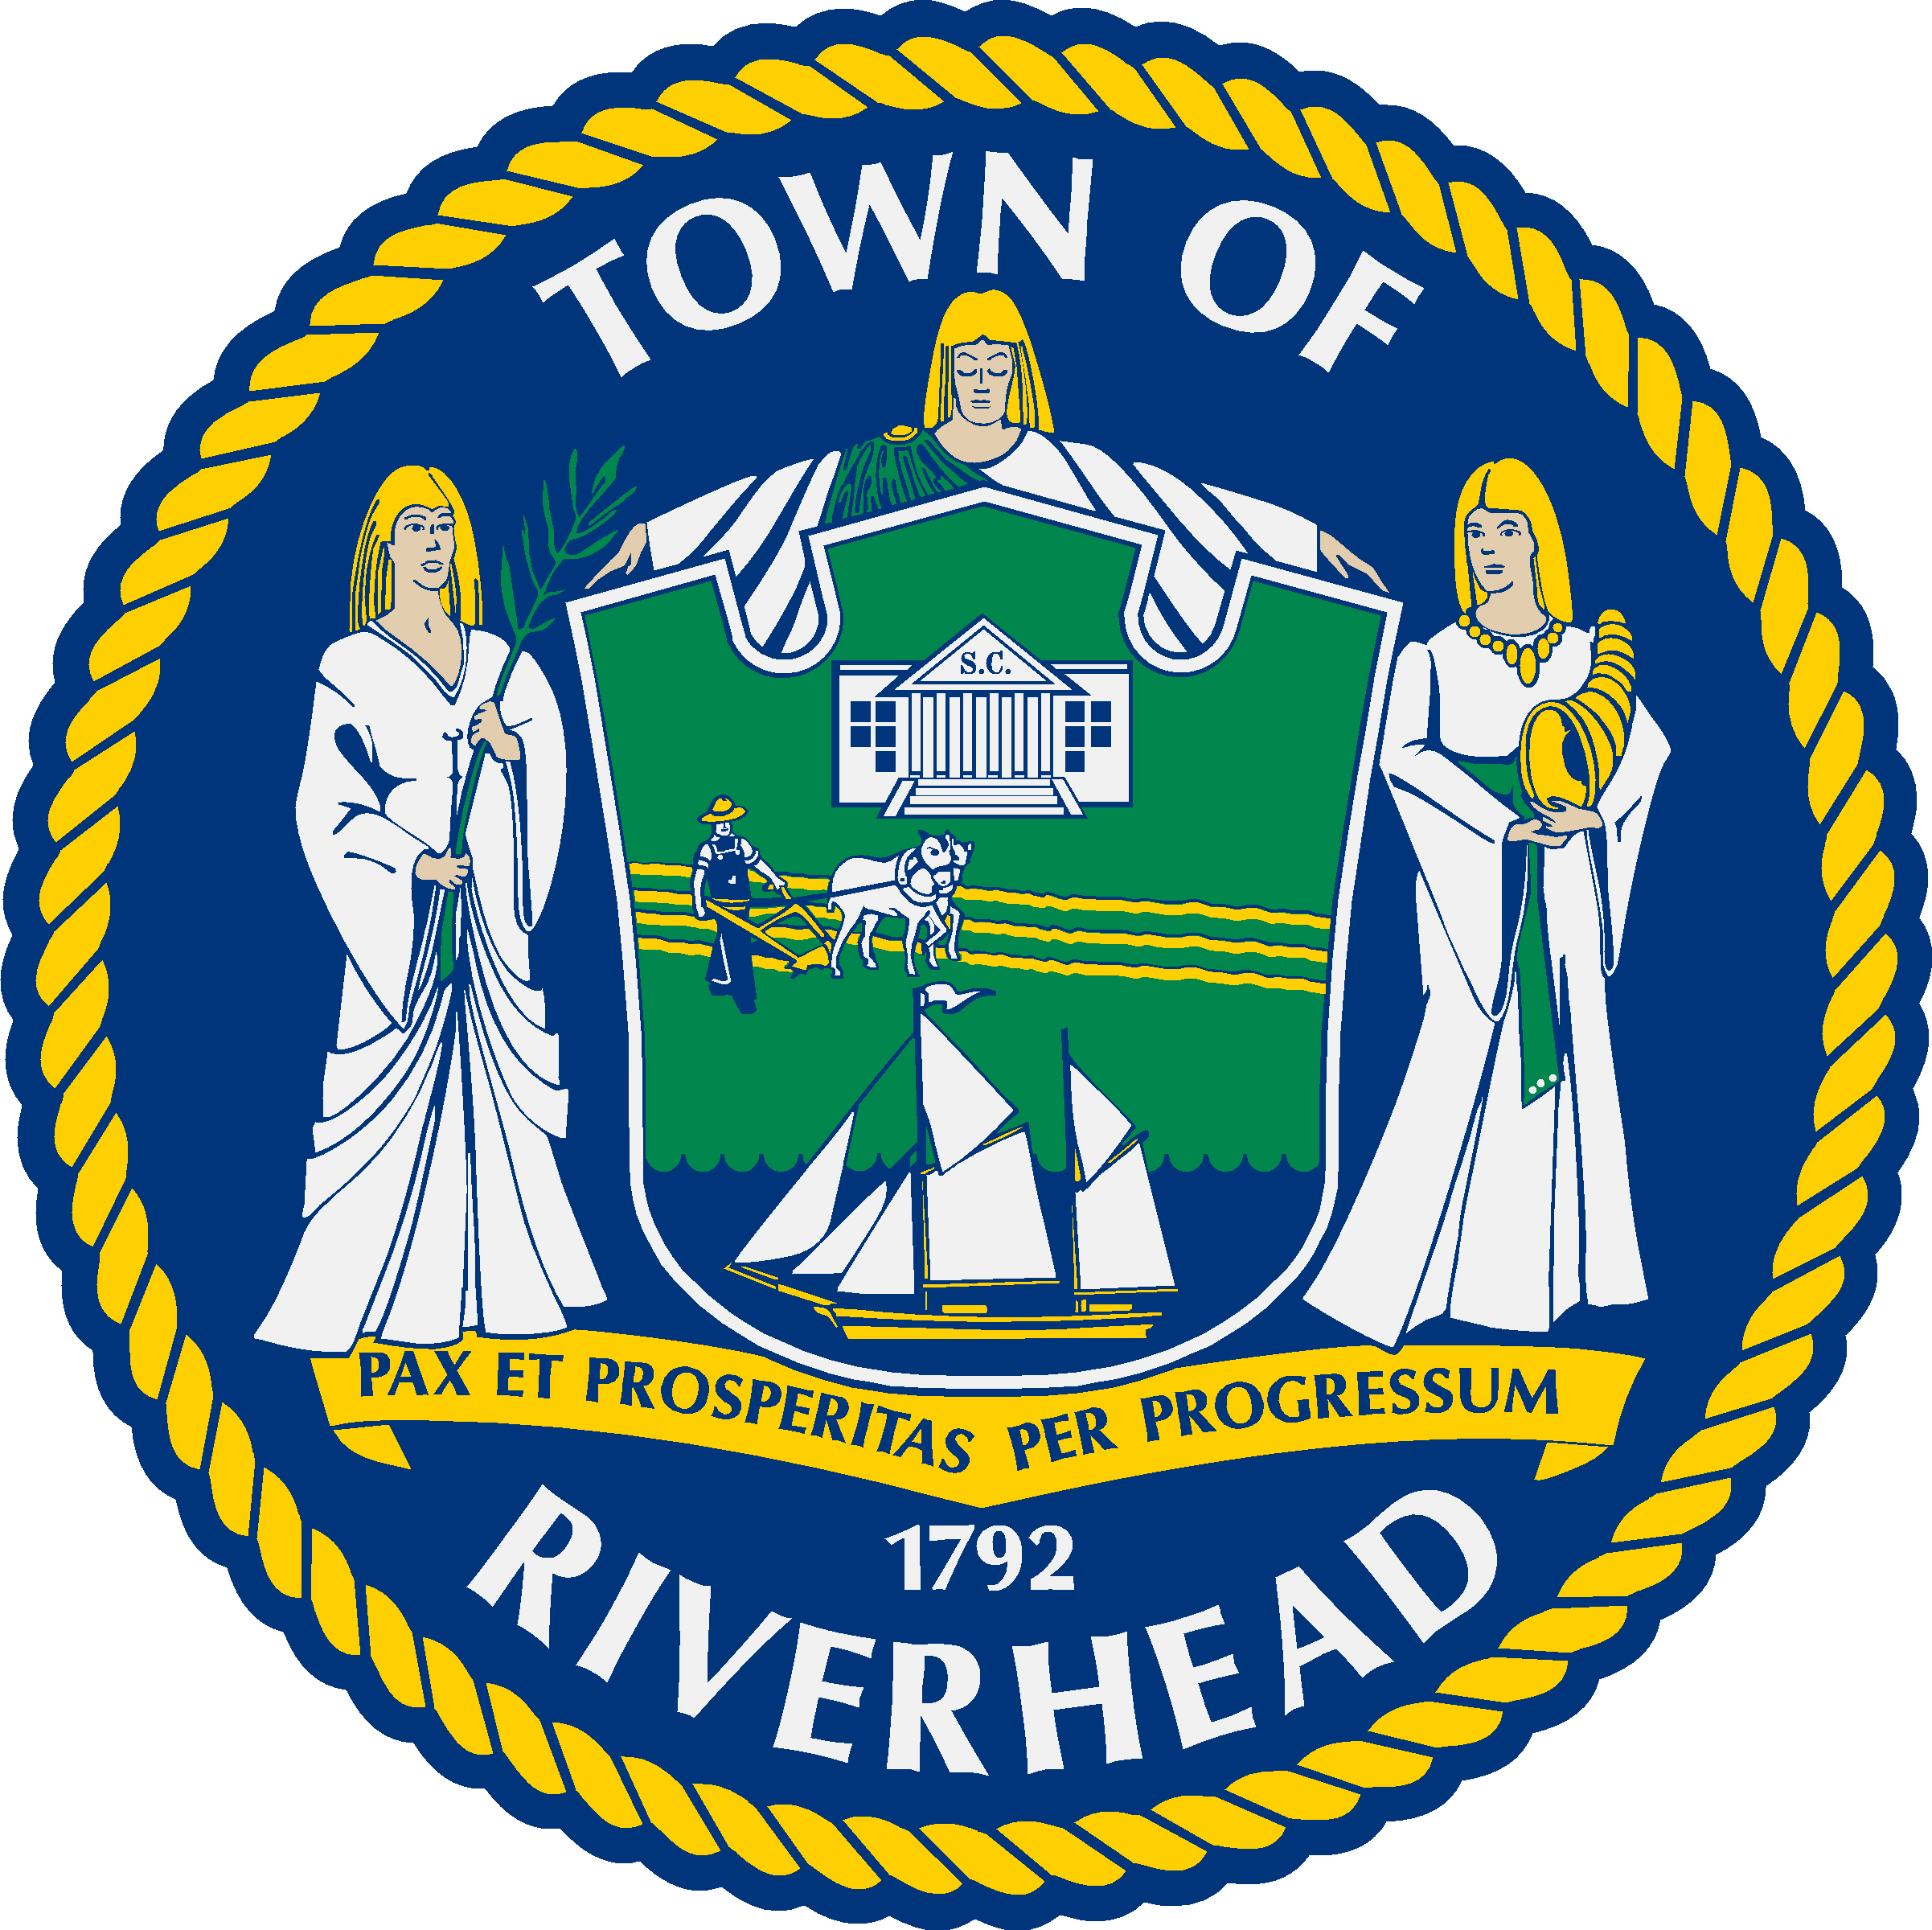 Town of Riverhead, NY - Town of Riverhead, New York - organization logo